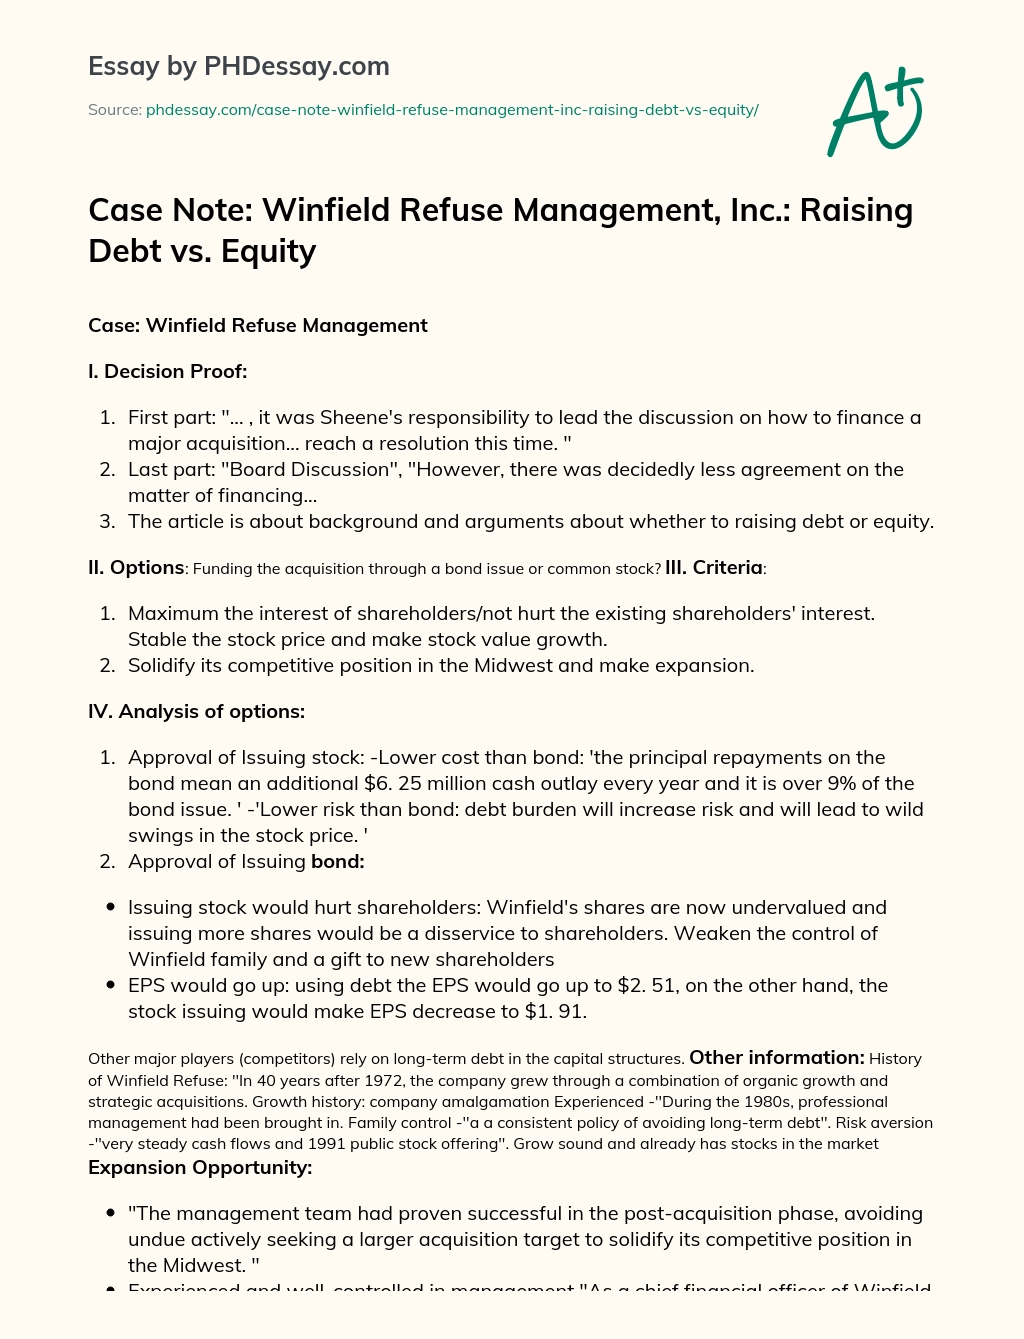 Case Note: Winfield Refuse Management, Inc.: Raising Debt vs. Equity essay